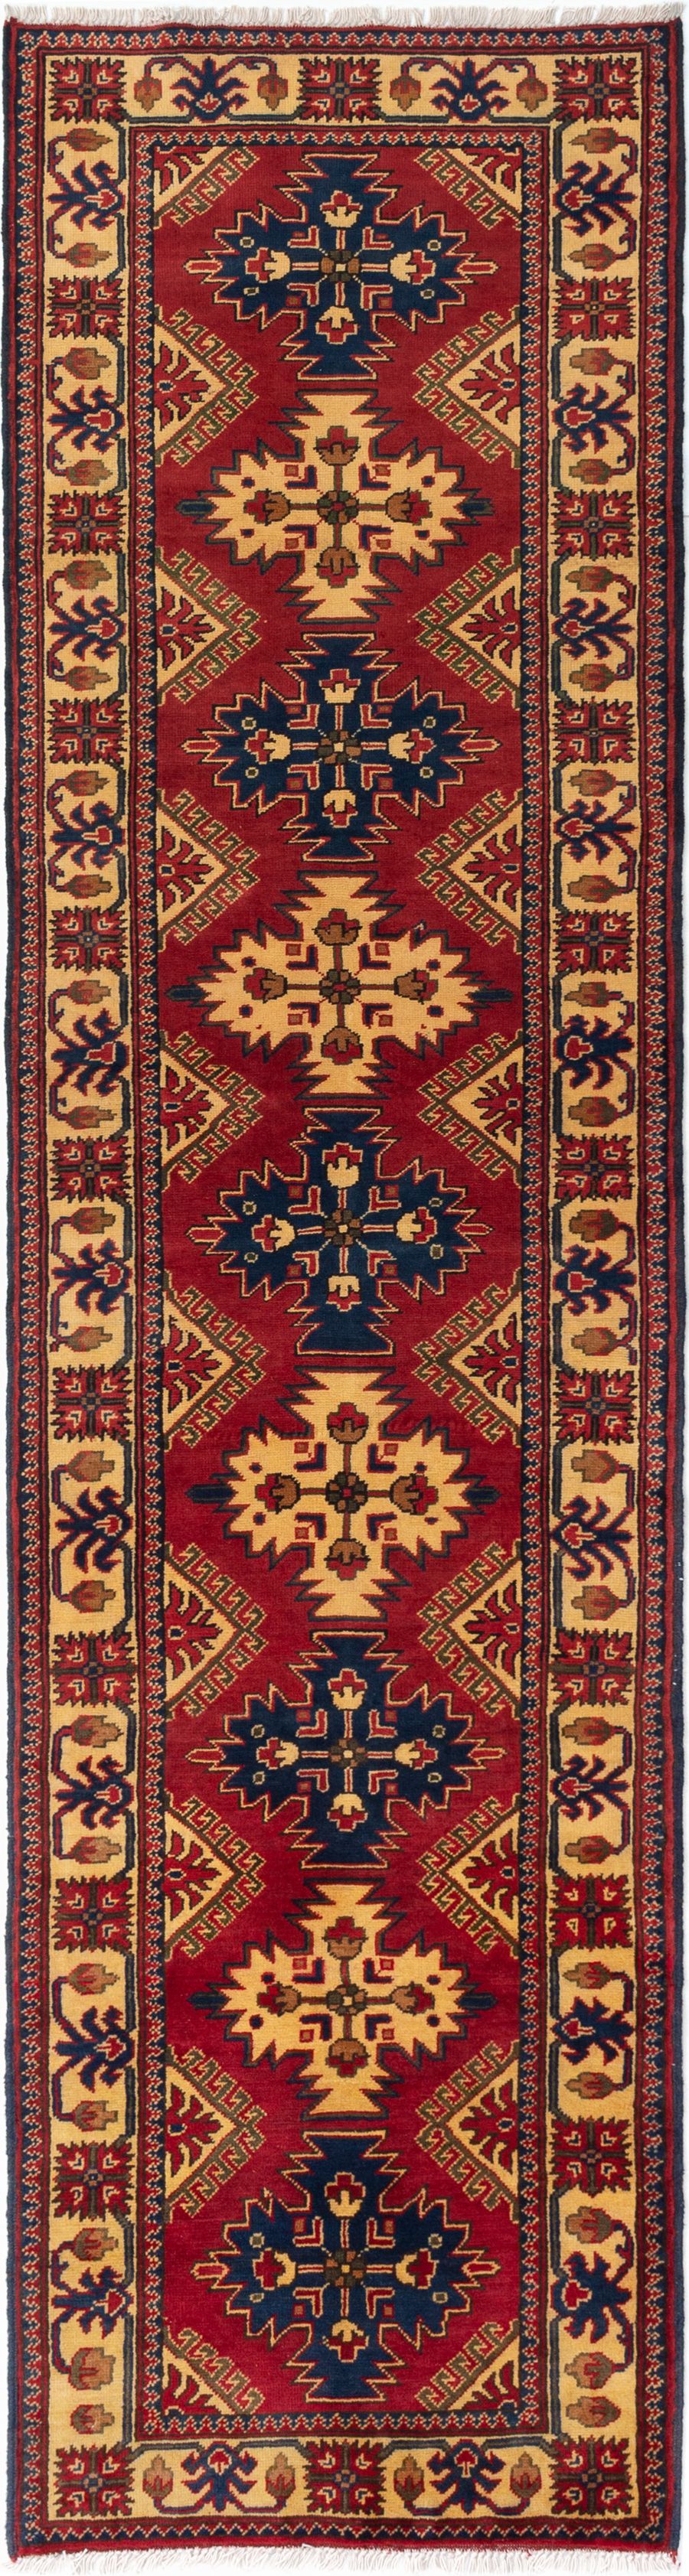 Hand-knotted Finest Kargahi Dark Red Wool Rug 2'6" x 10'6" Size: 2'6" x 10'6"  